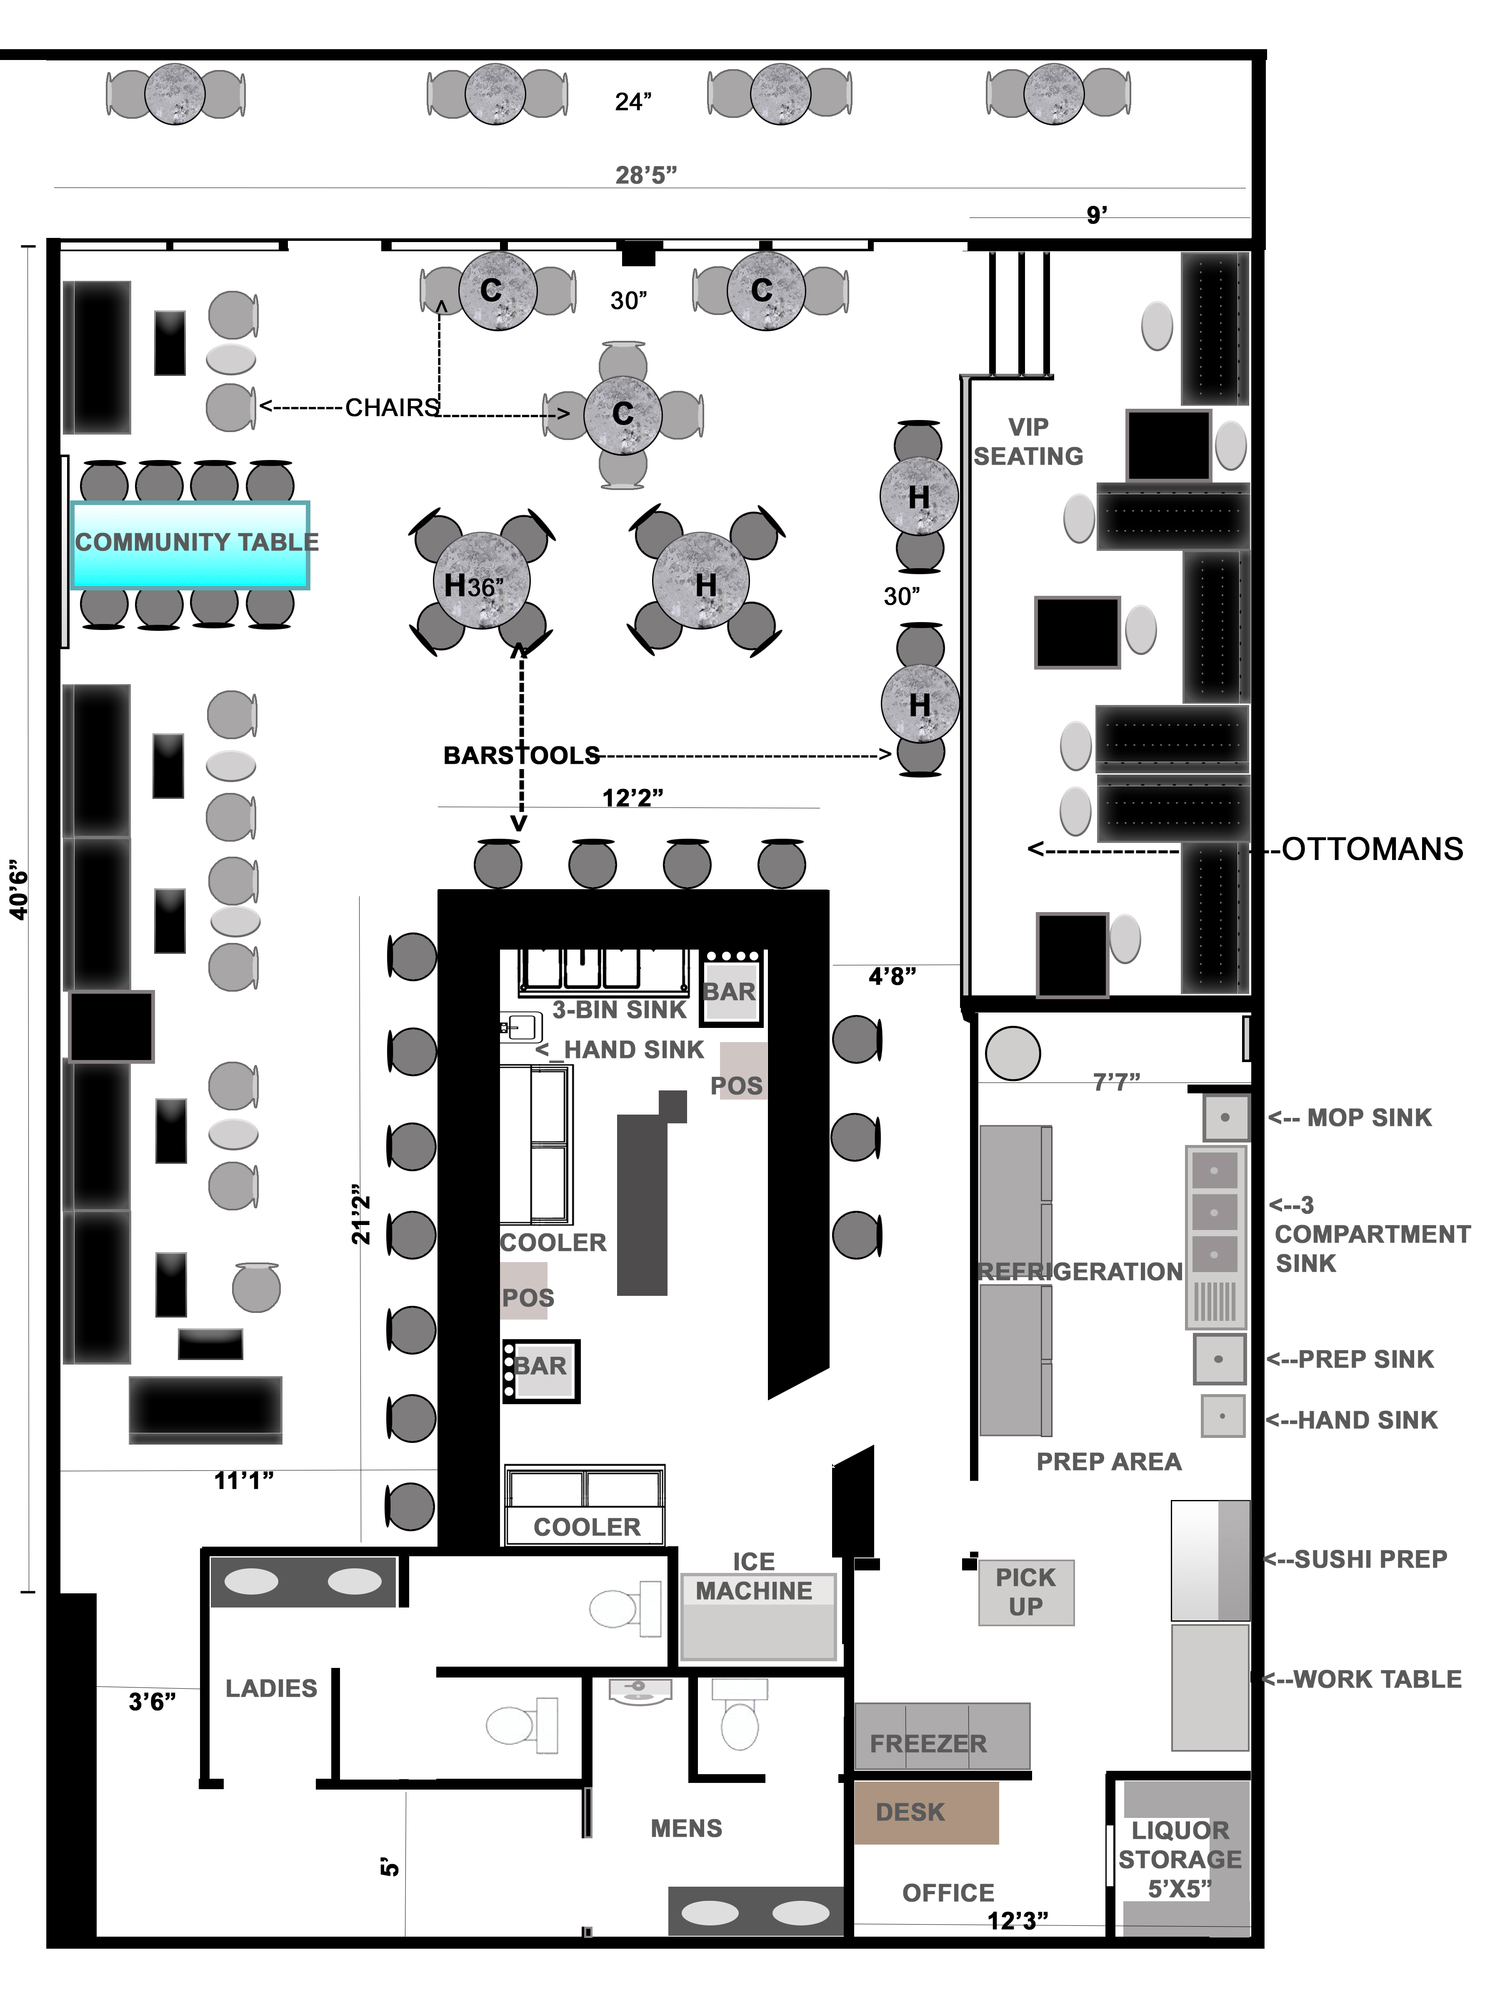 How to Design a Restaurant Floor Plan + 10 Restaurant